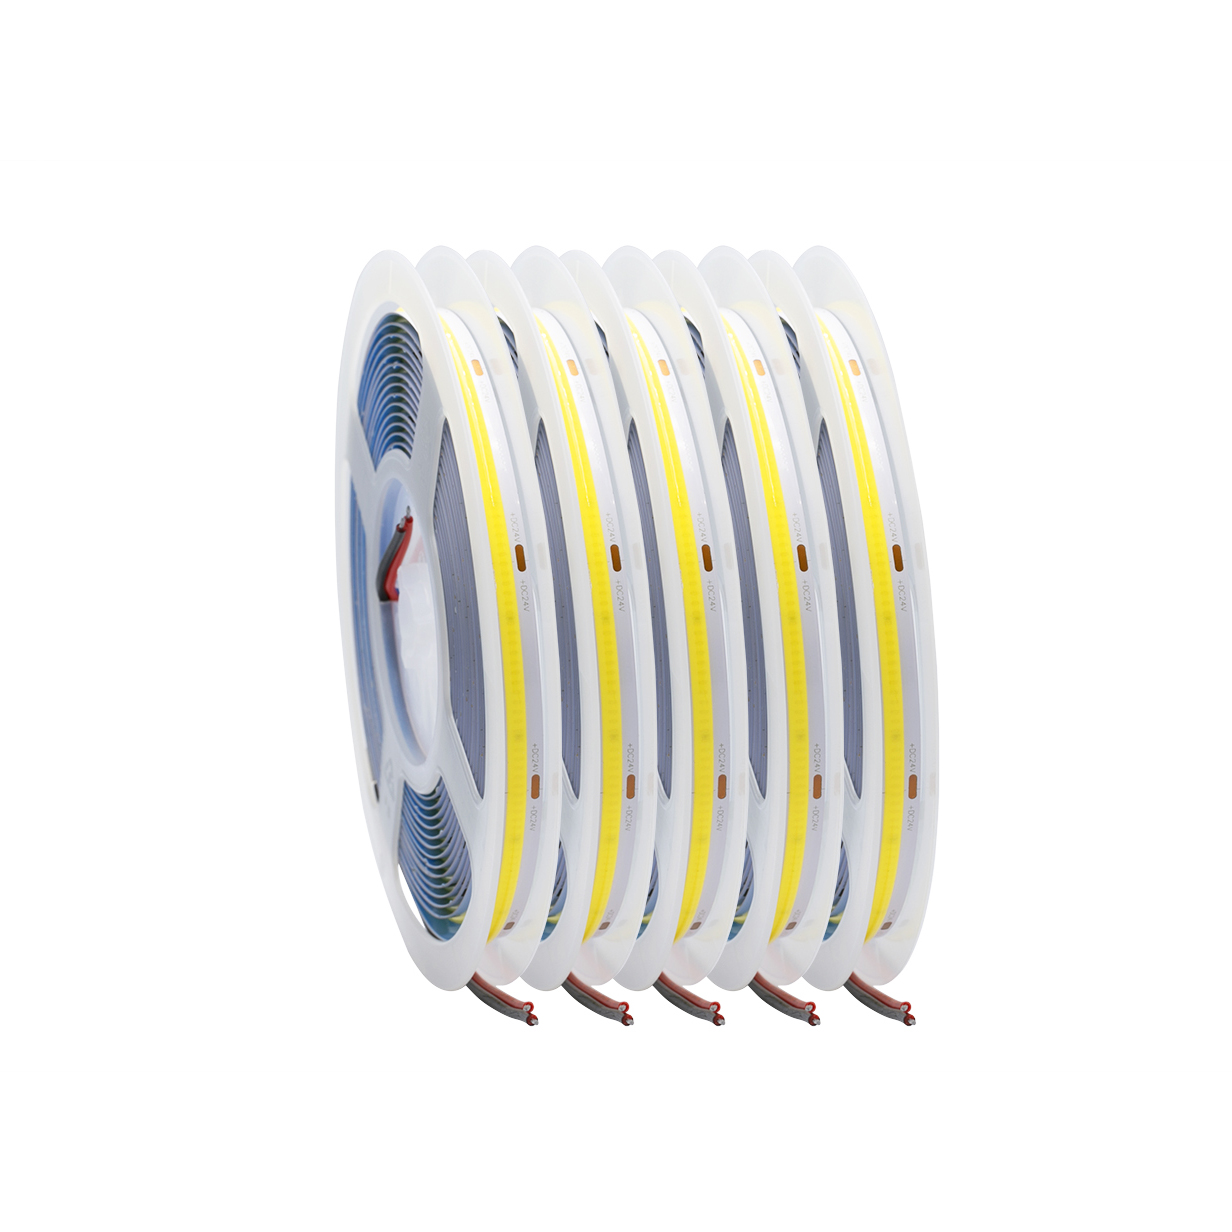 COB LED Strip Light Warm White High Lumen Flexible LED Tape Super Bright (9)nkd